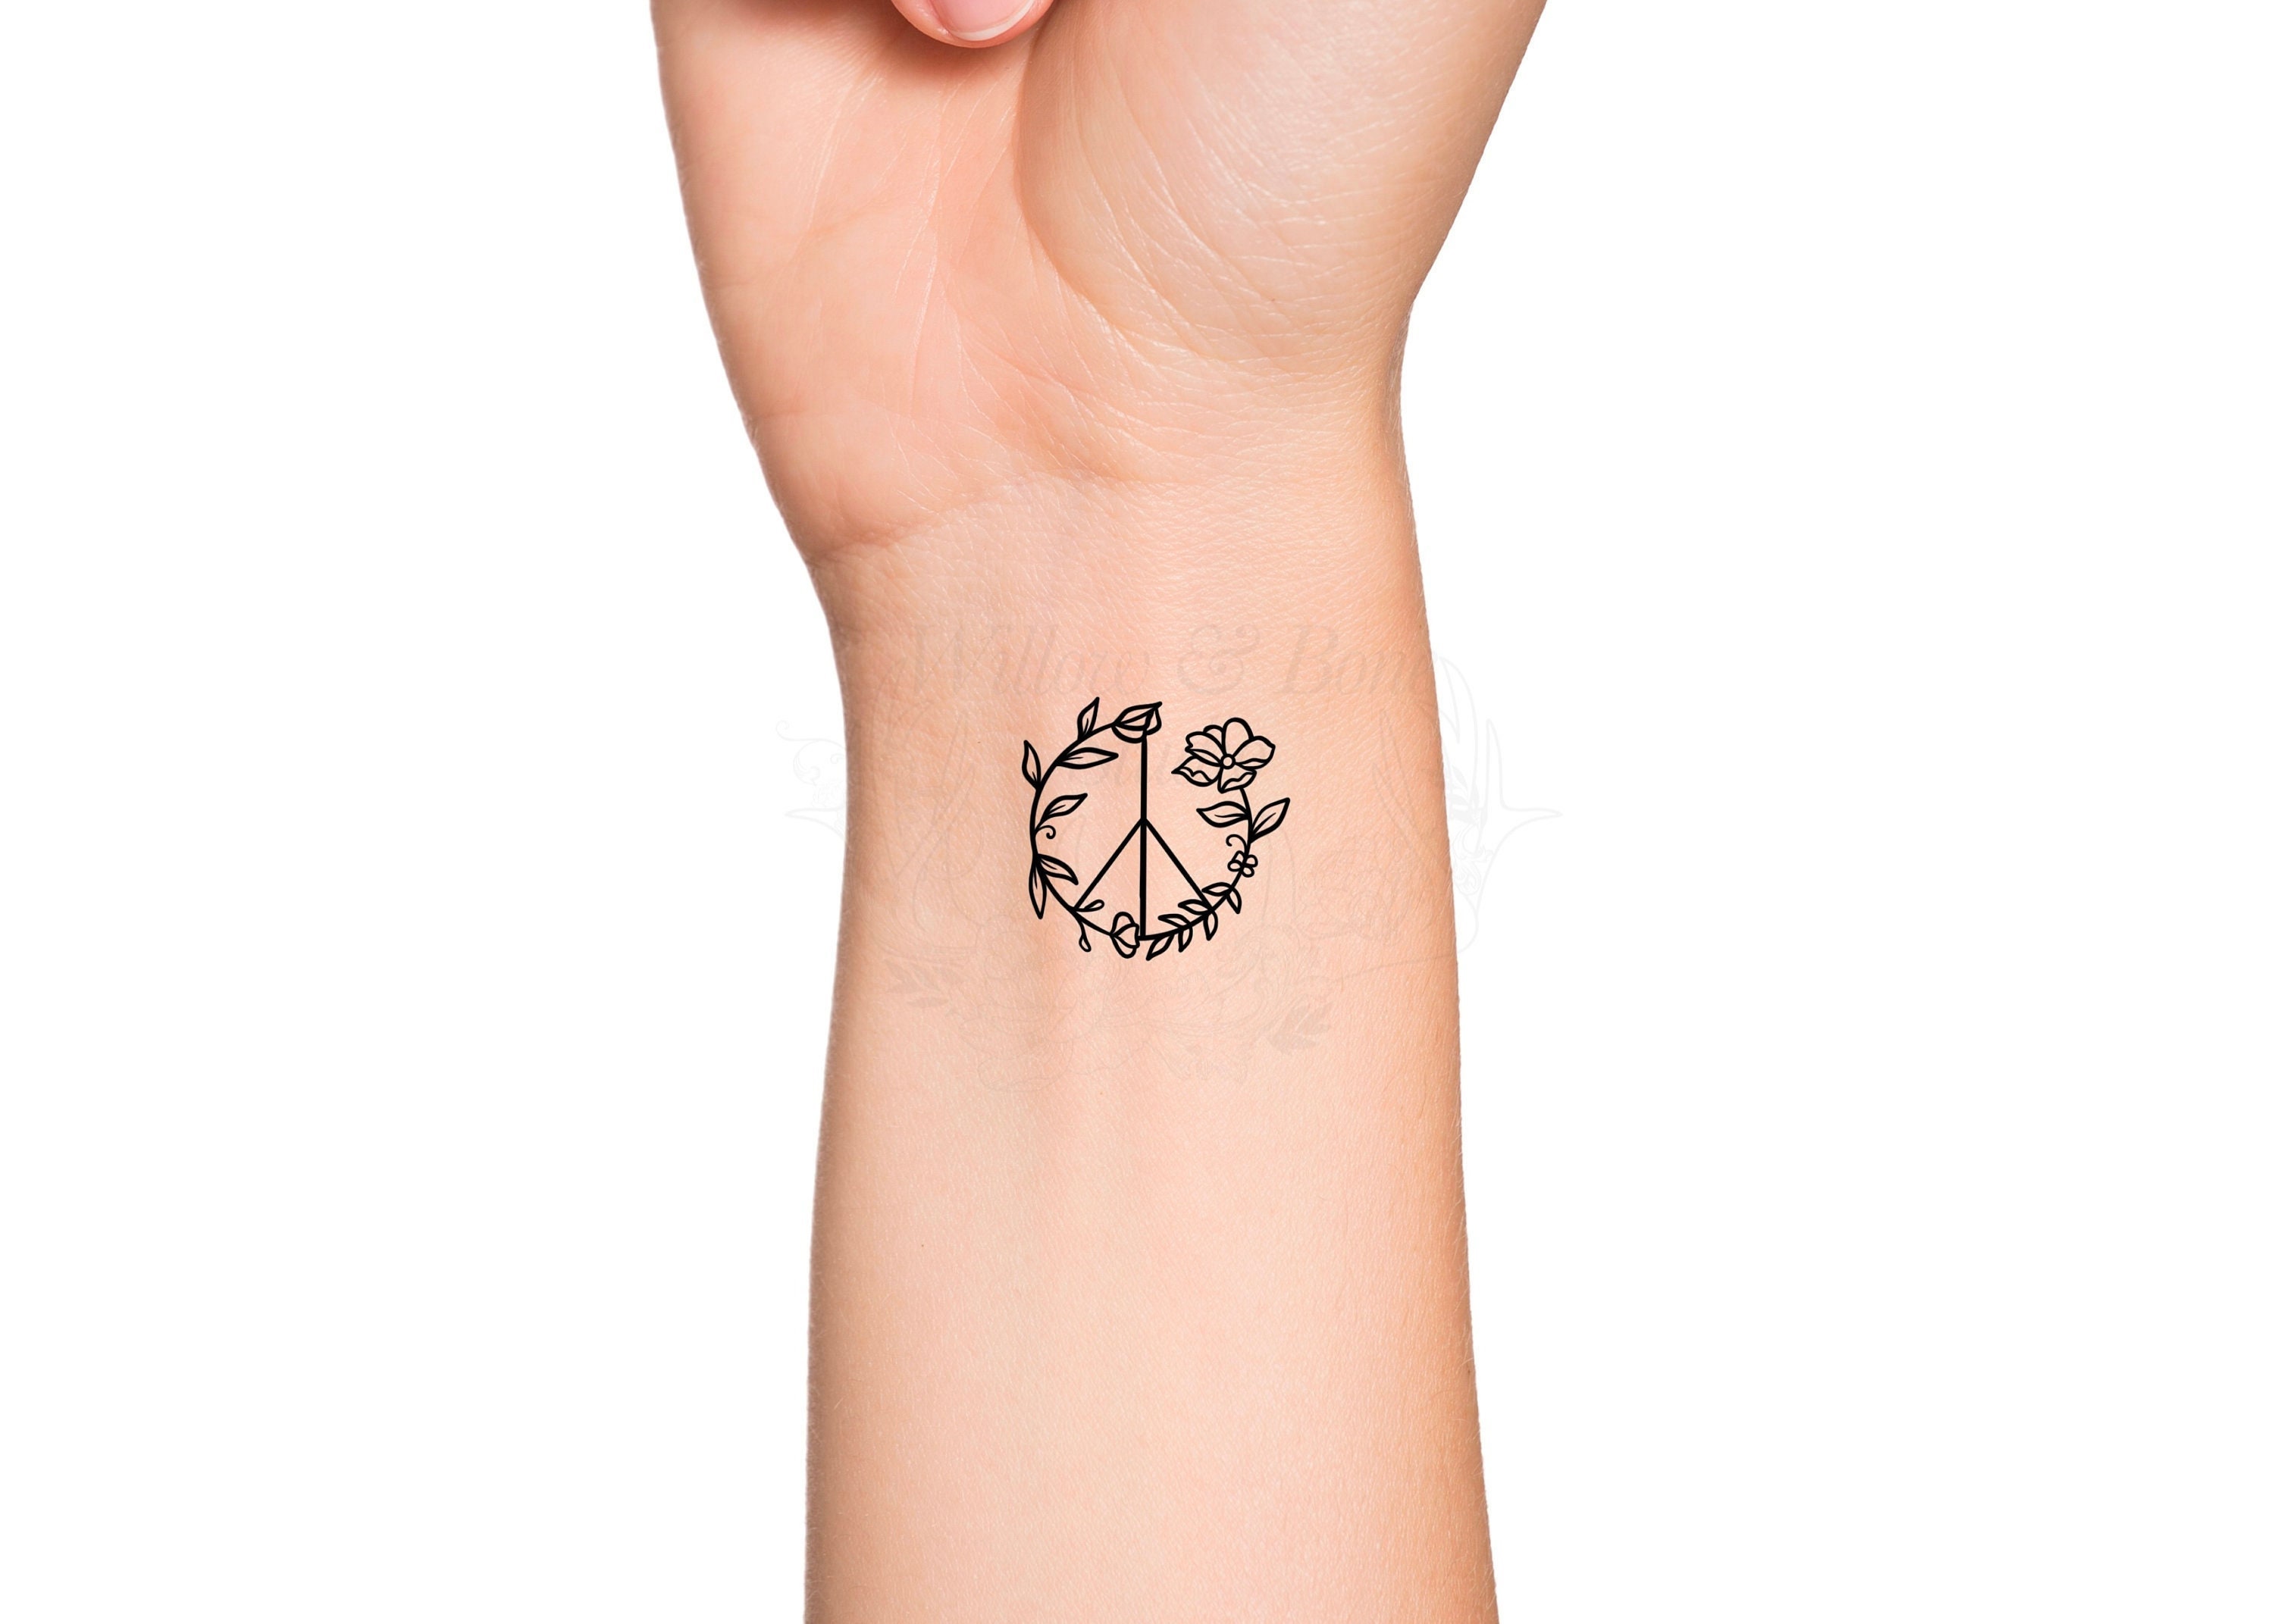 Explore the 36 Best Peace Tattoo Ideas 2017  Tattoodo